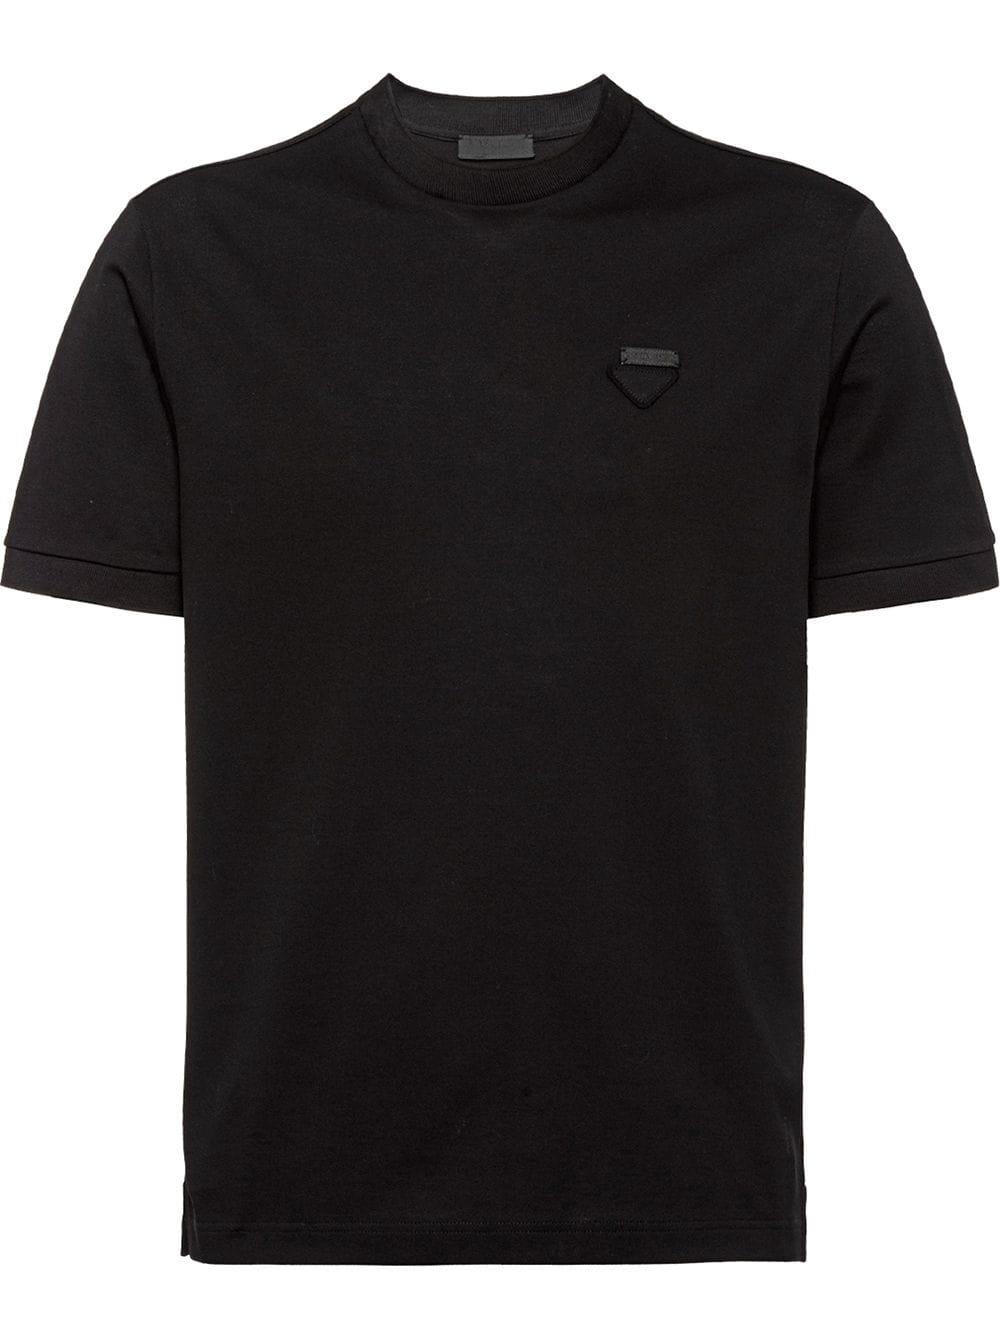 Prada Cotton Slim Fit Piqué T-shirt in Black for Men - Lyst